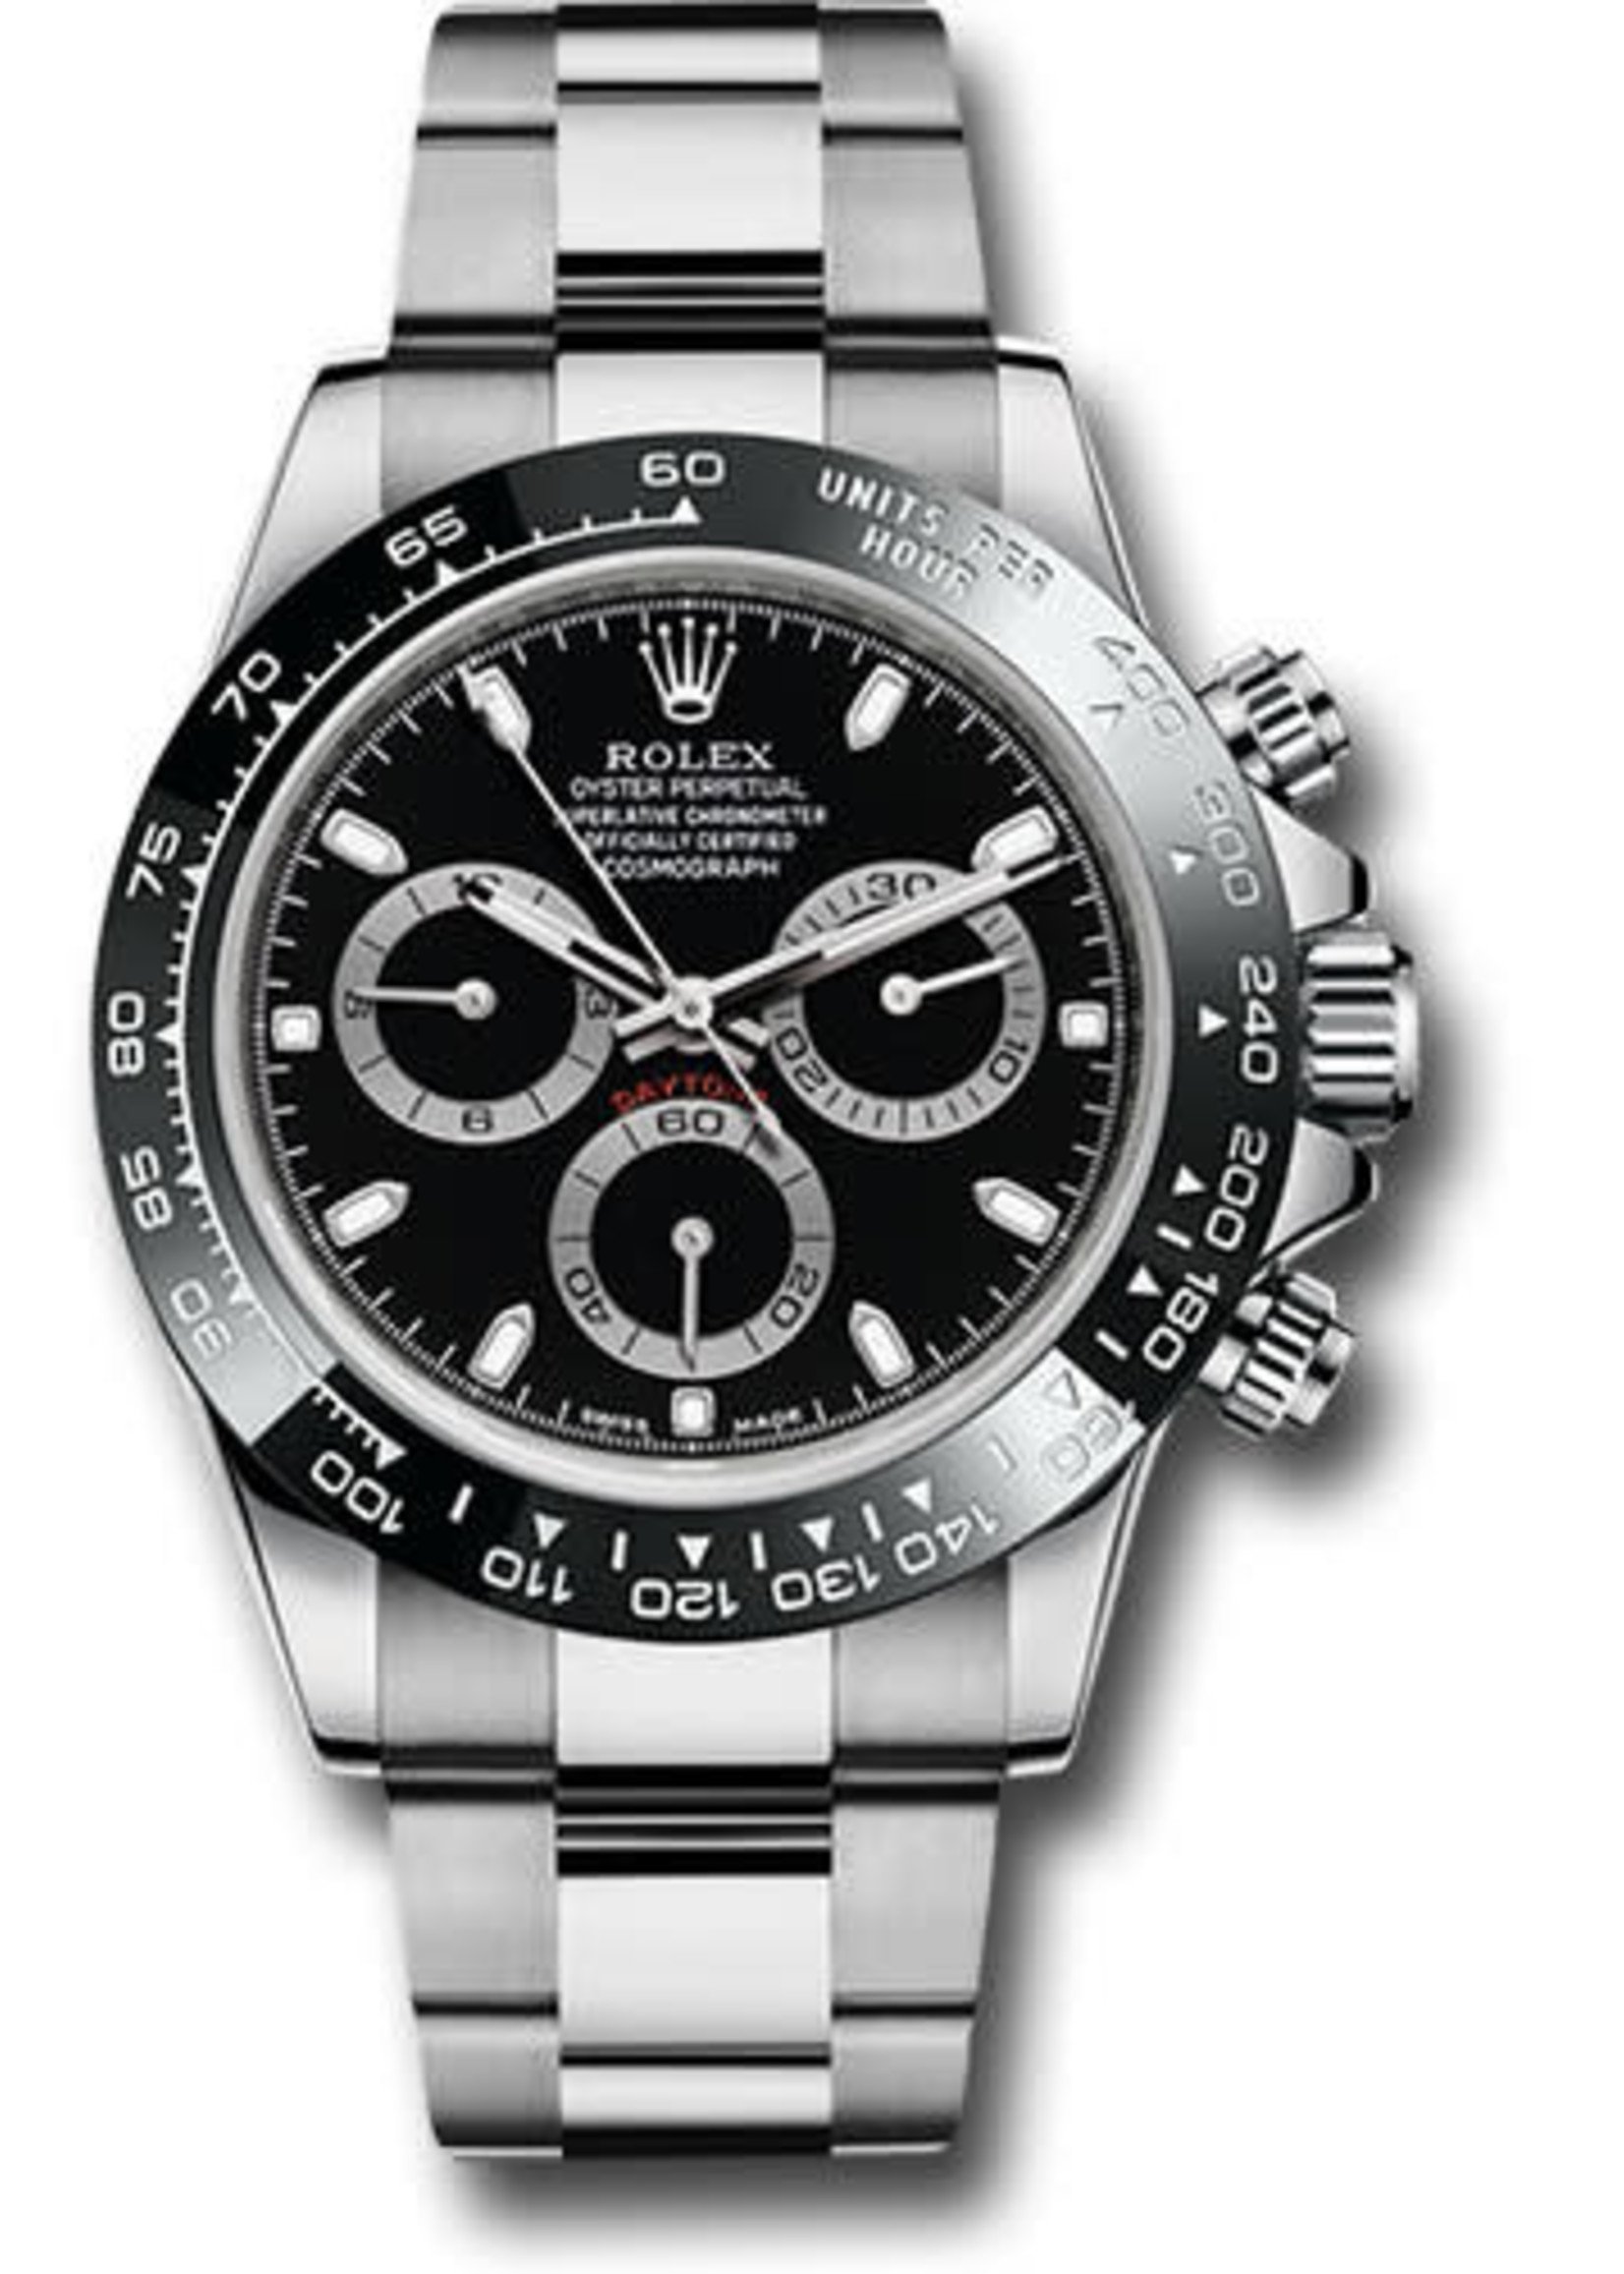 Rolex Watches ROLEX DAYTONA 40MM #116500LN (2018 B+P)